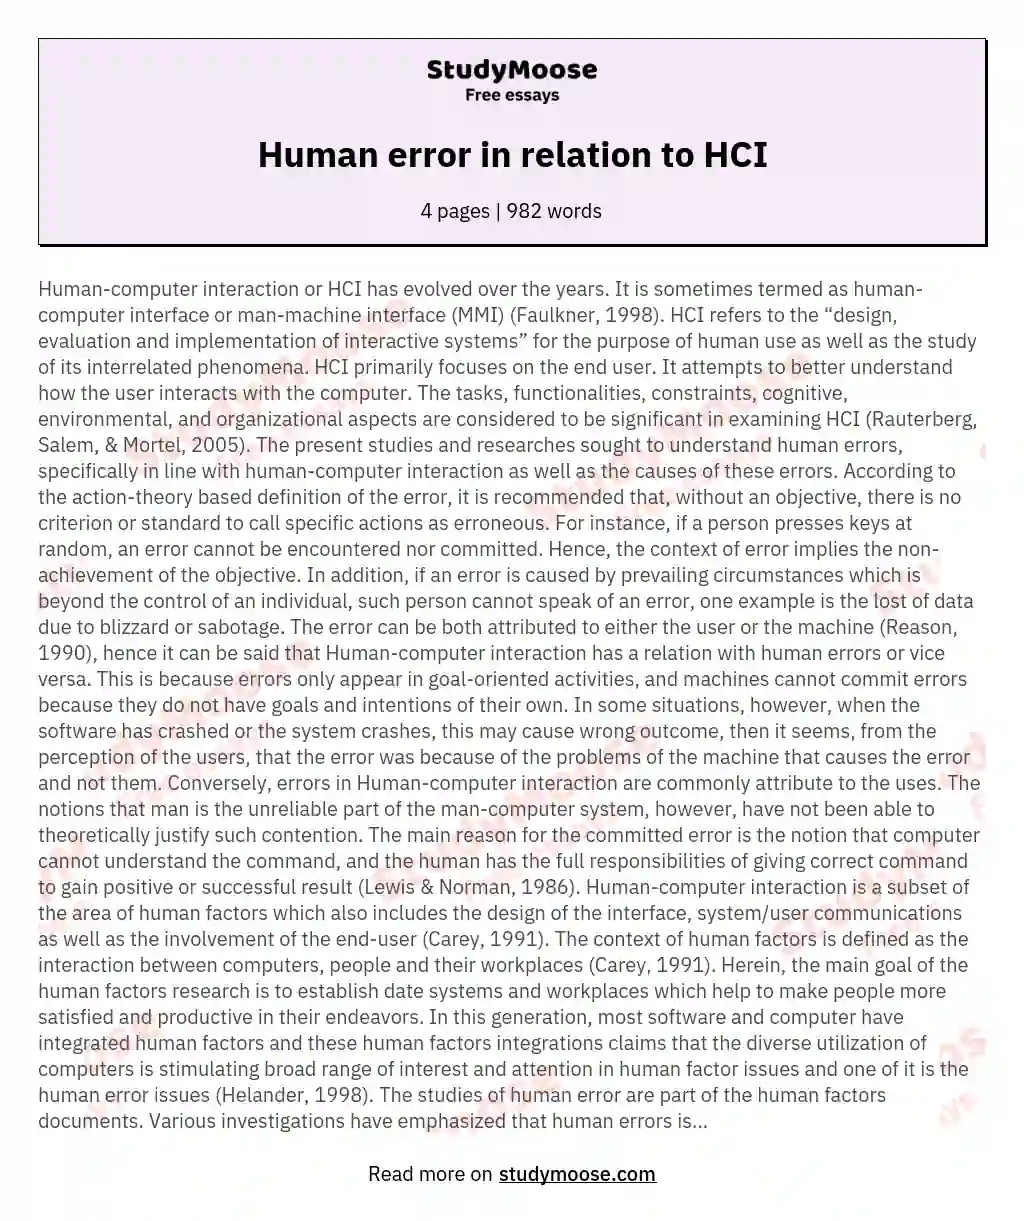 Human error in relation to HCI essay